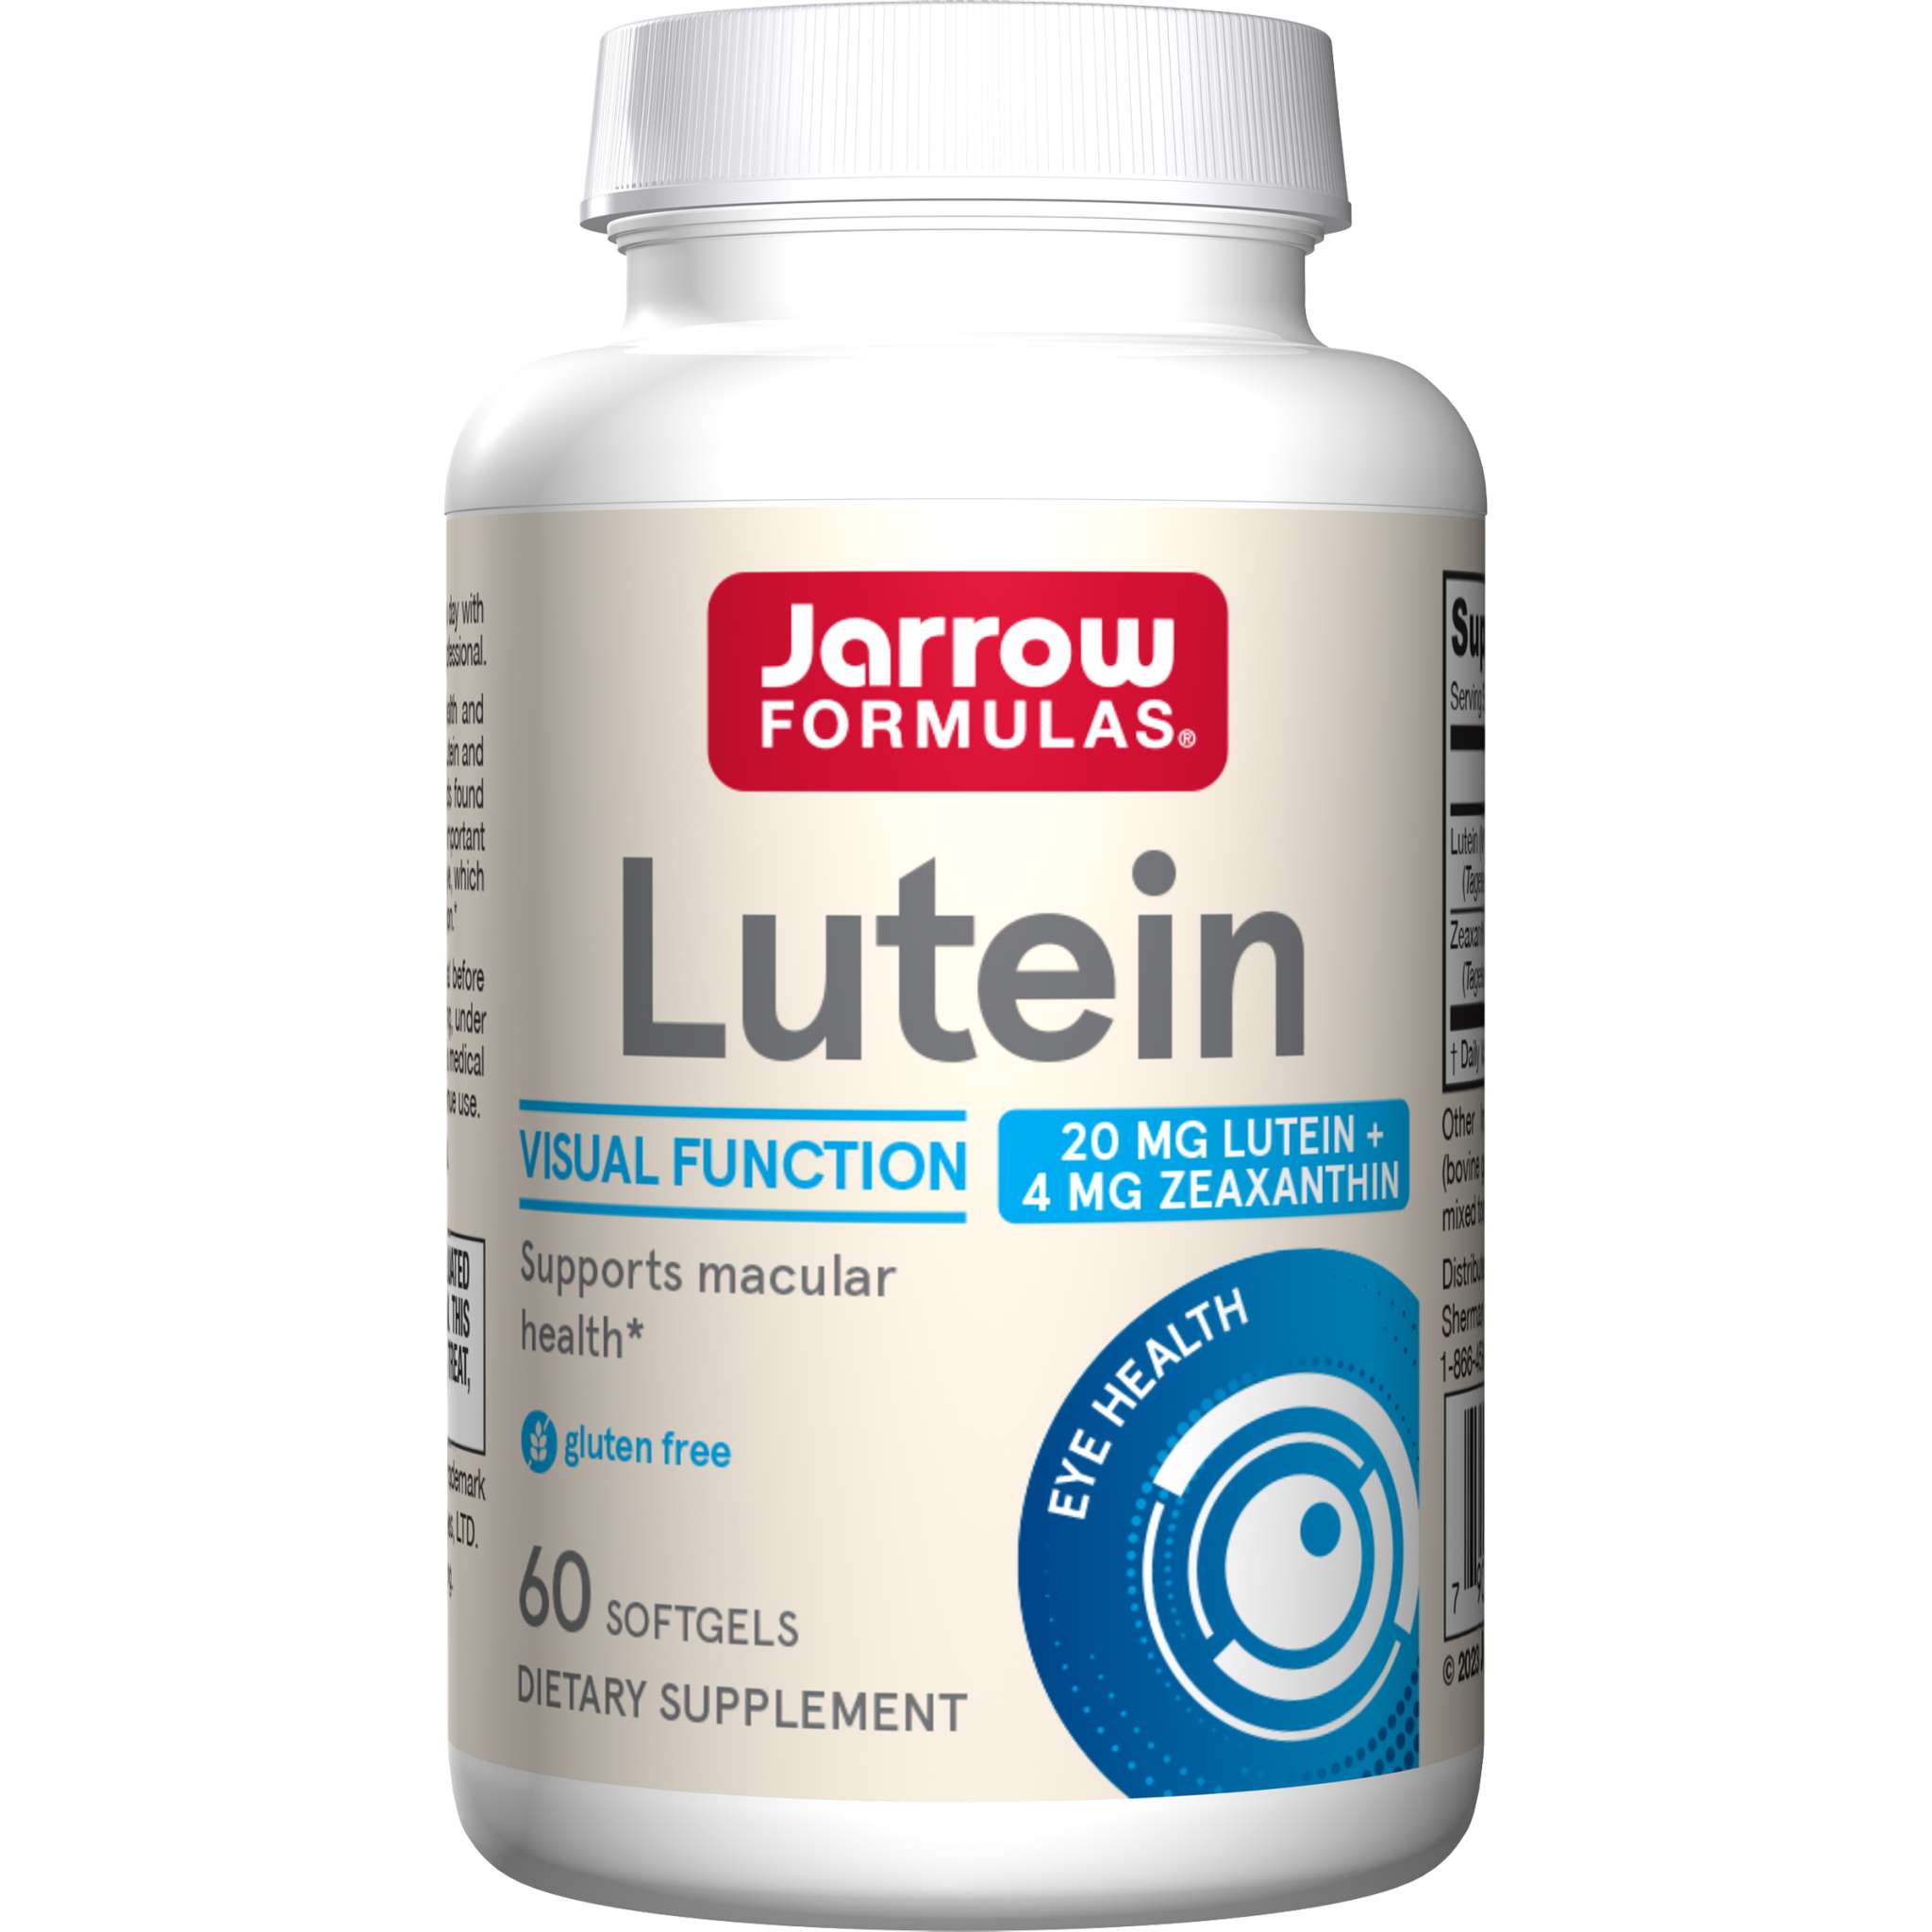 Jarrow Formulas - Lutein 20 mg softgel